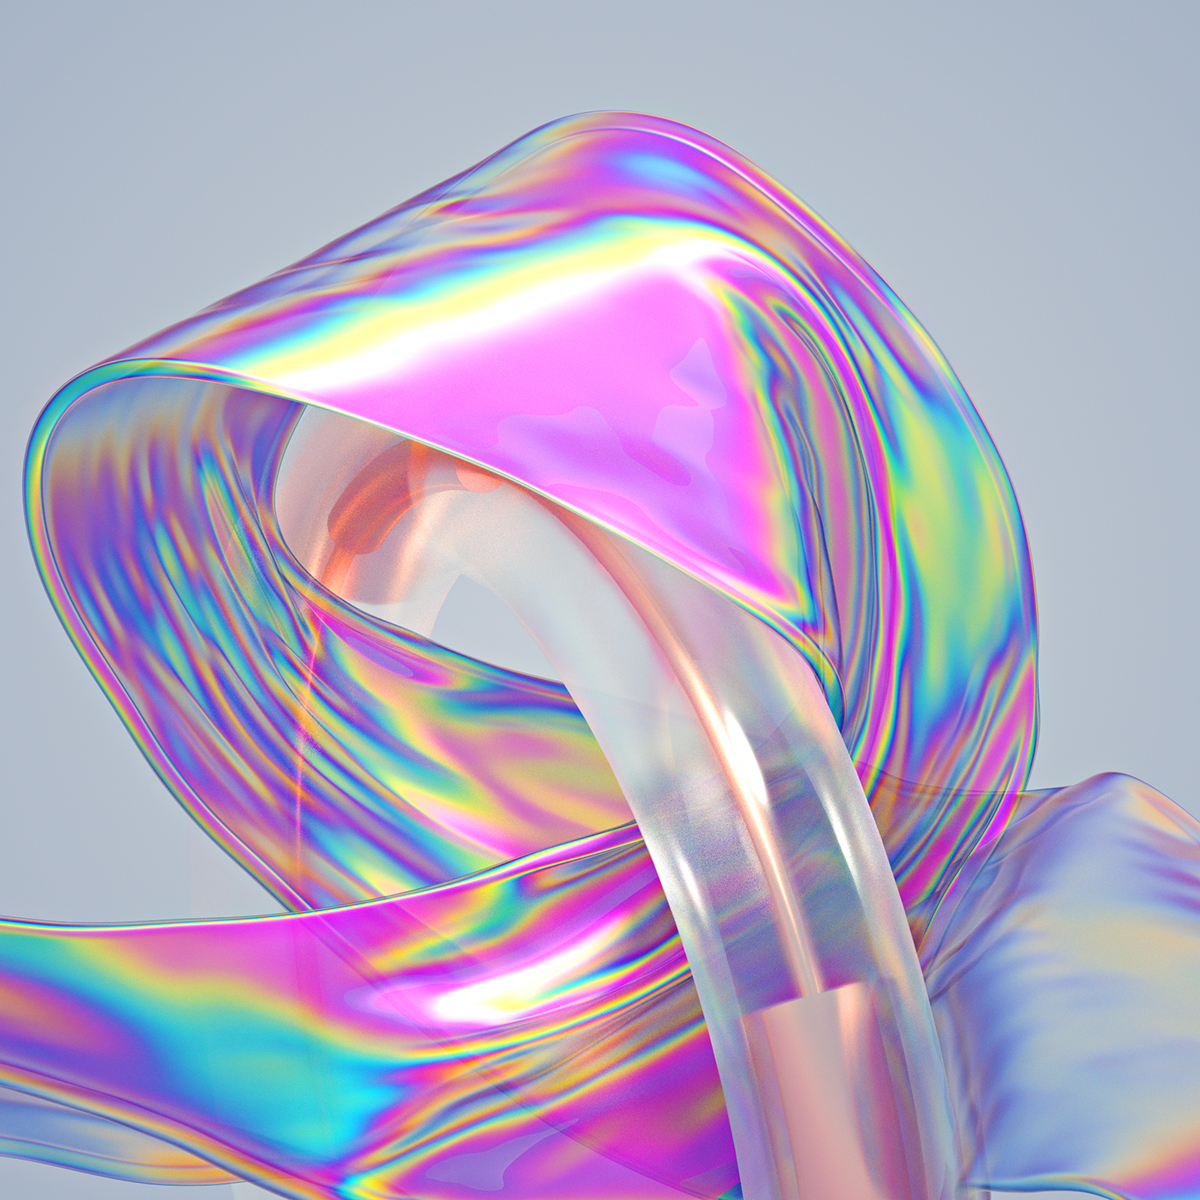 machineast translucent iridescent rainbow colors spectrum vibrant cloth 3D cloth 3d art pearl cold